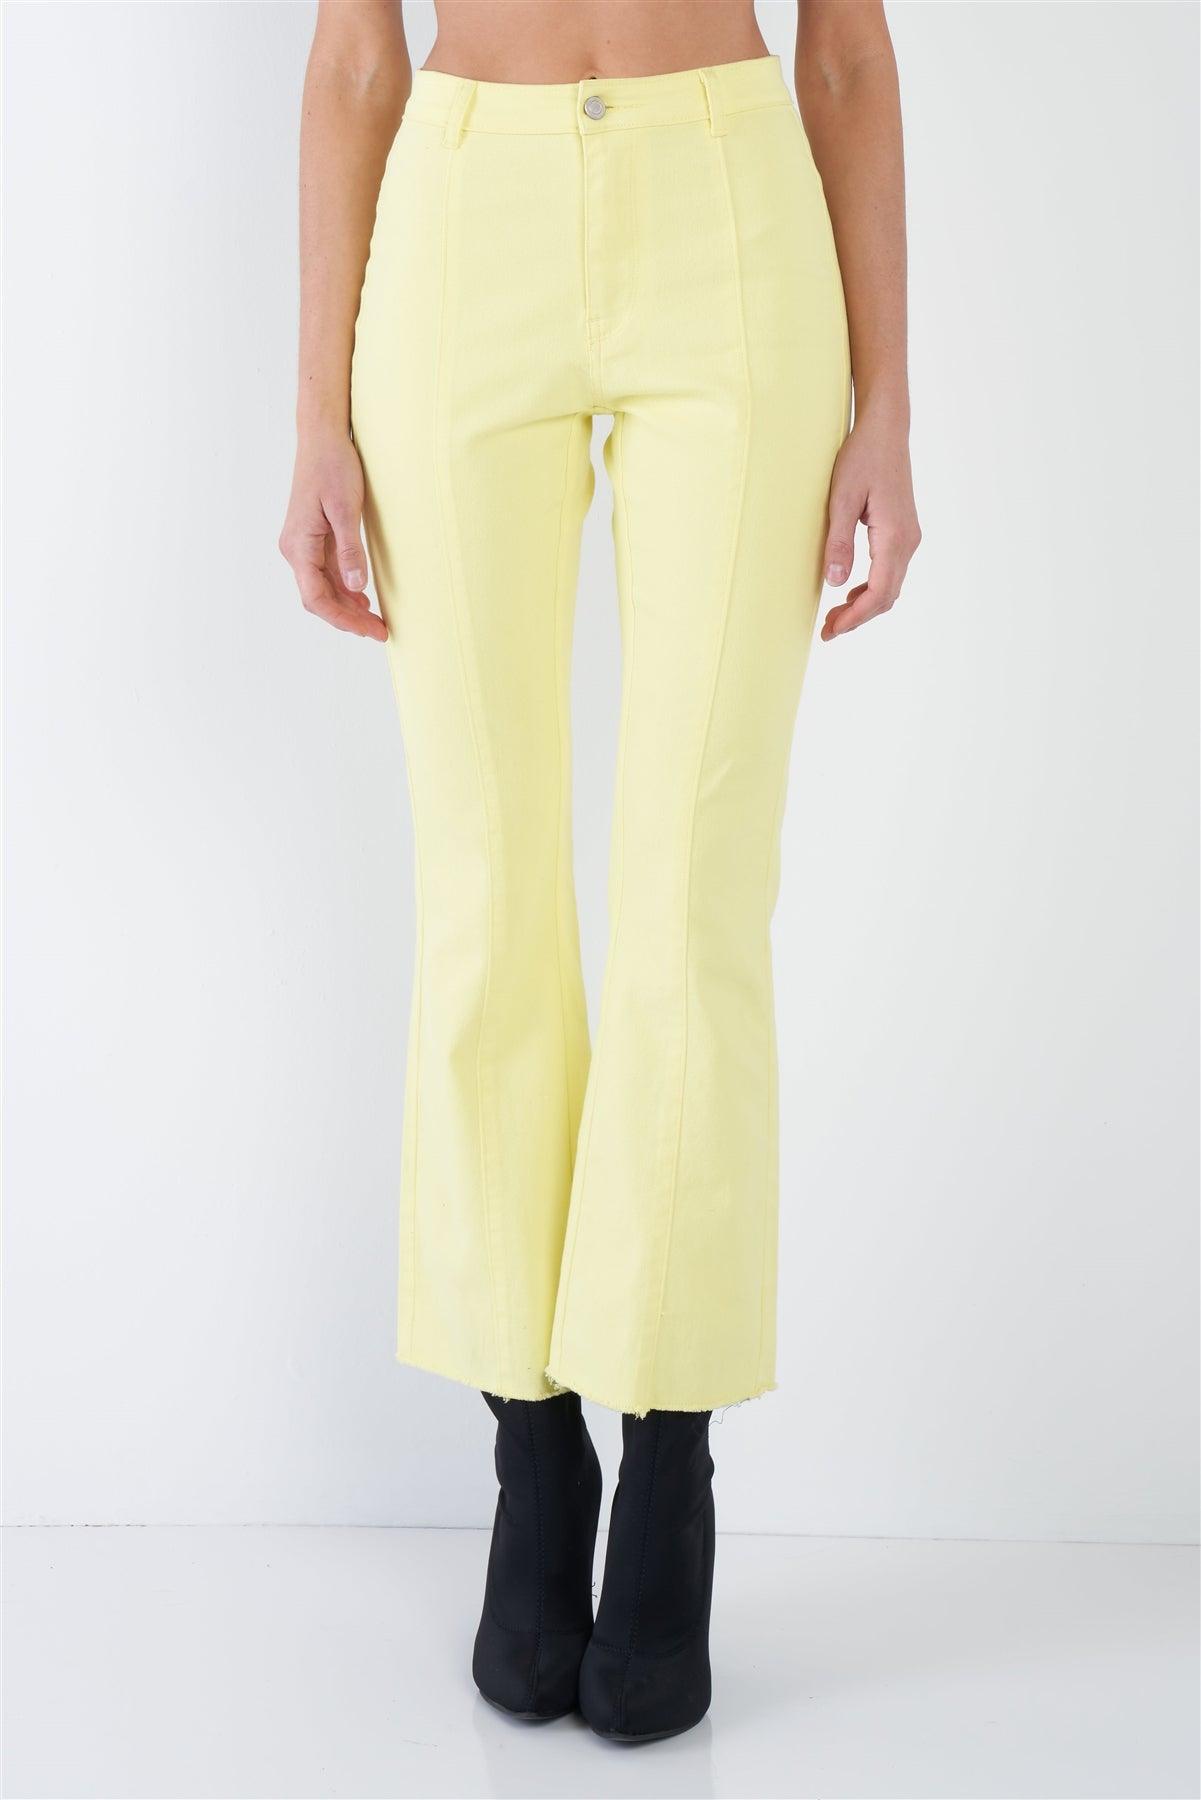 Yellow Denim Cotton Casual Front Pleat Jeans  /3-2-1